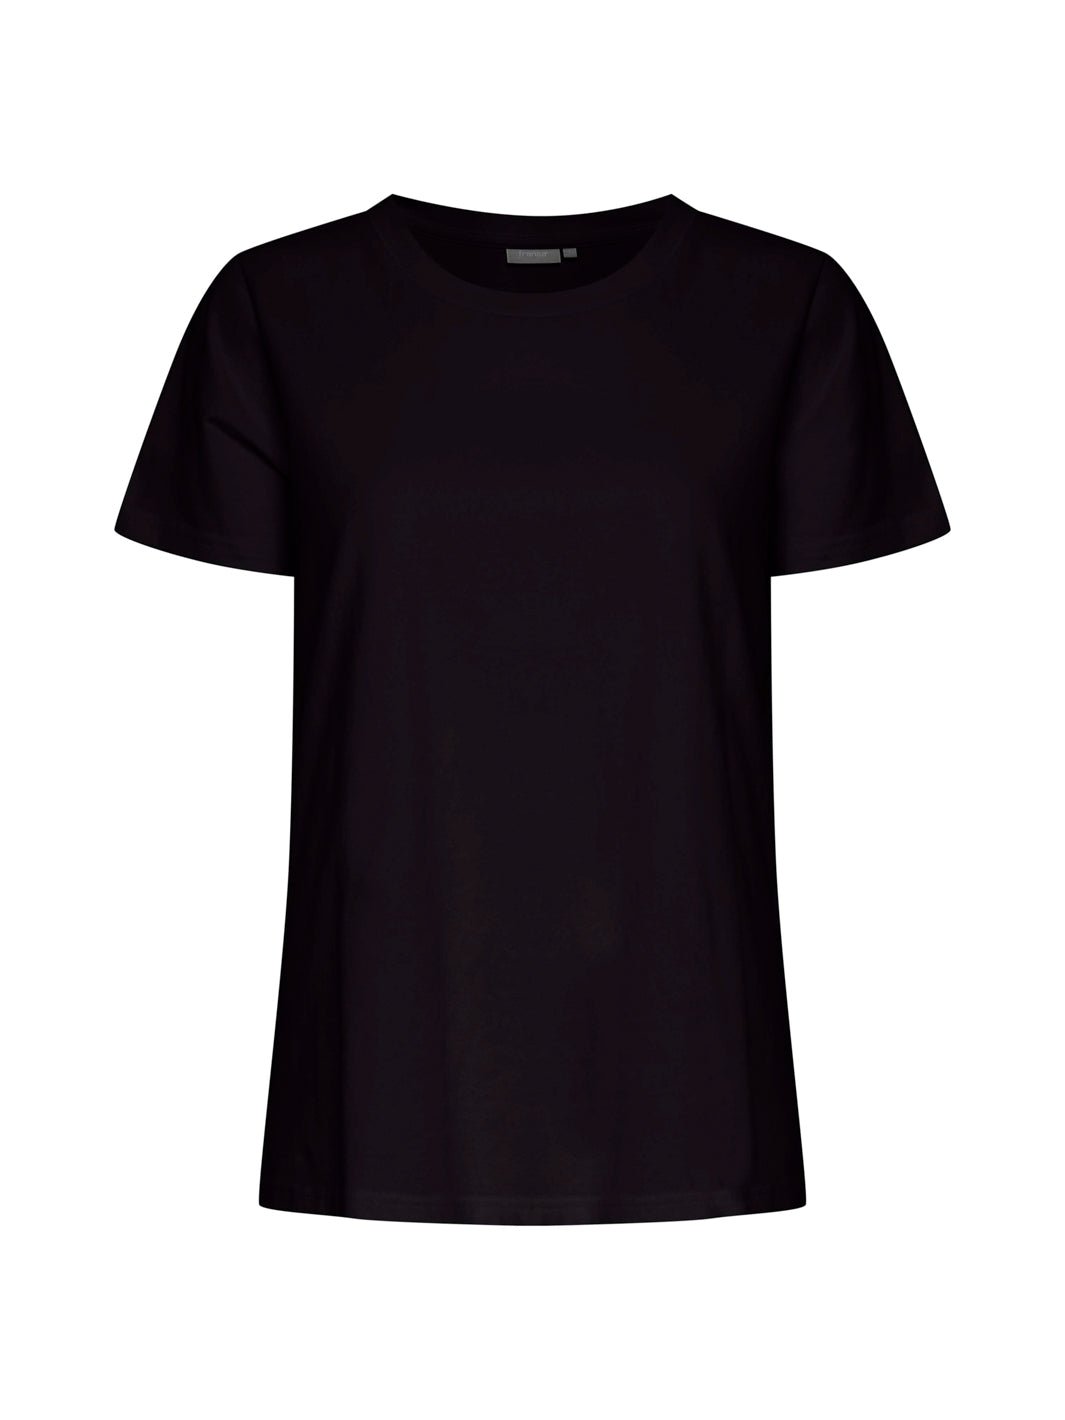 Fransa Zashoulder 1 t-shirt black - Online-Mode